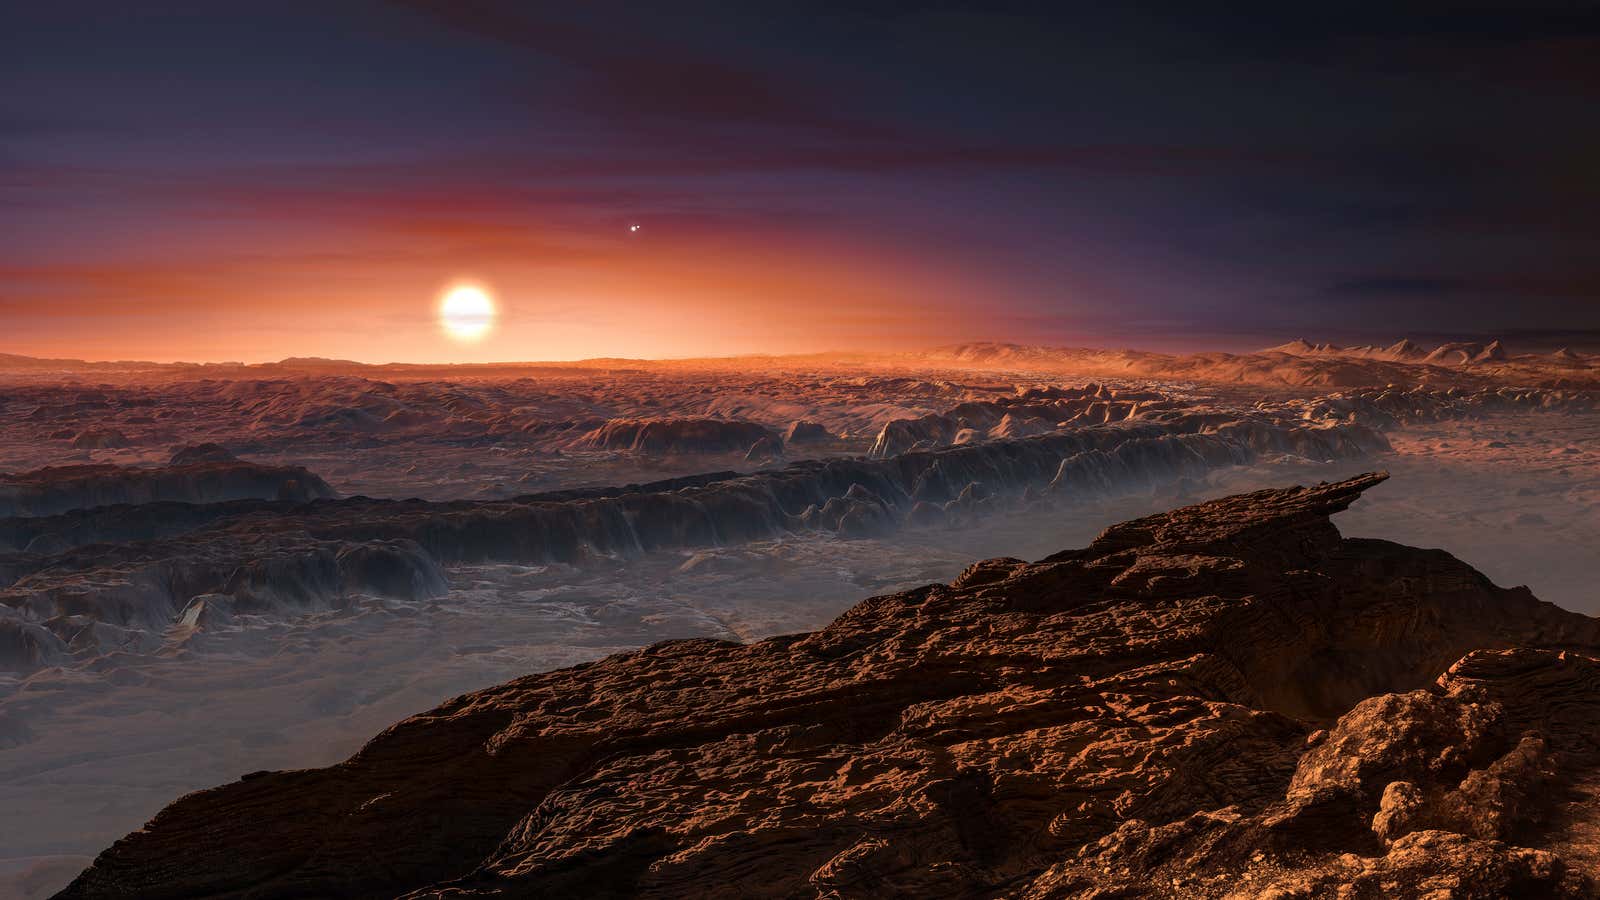 Imagine a permanet sunset on planet Proxima b.